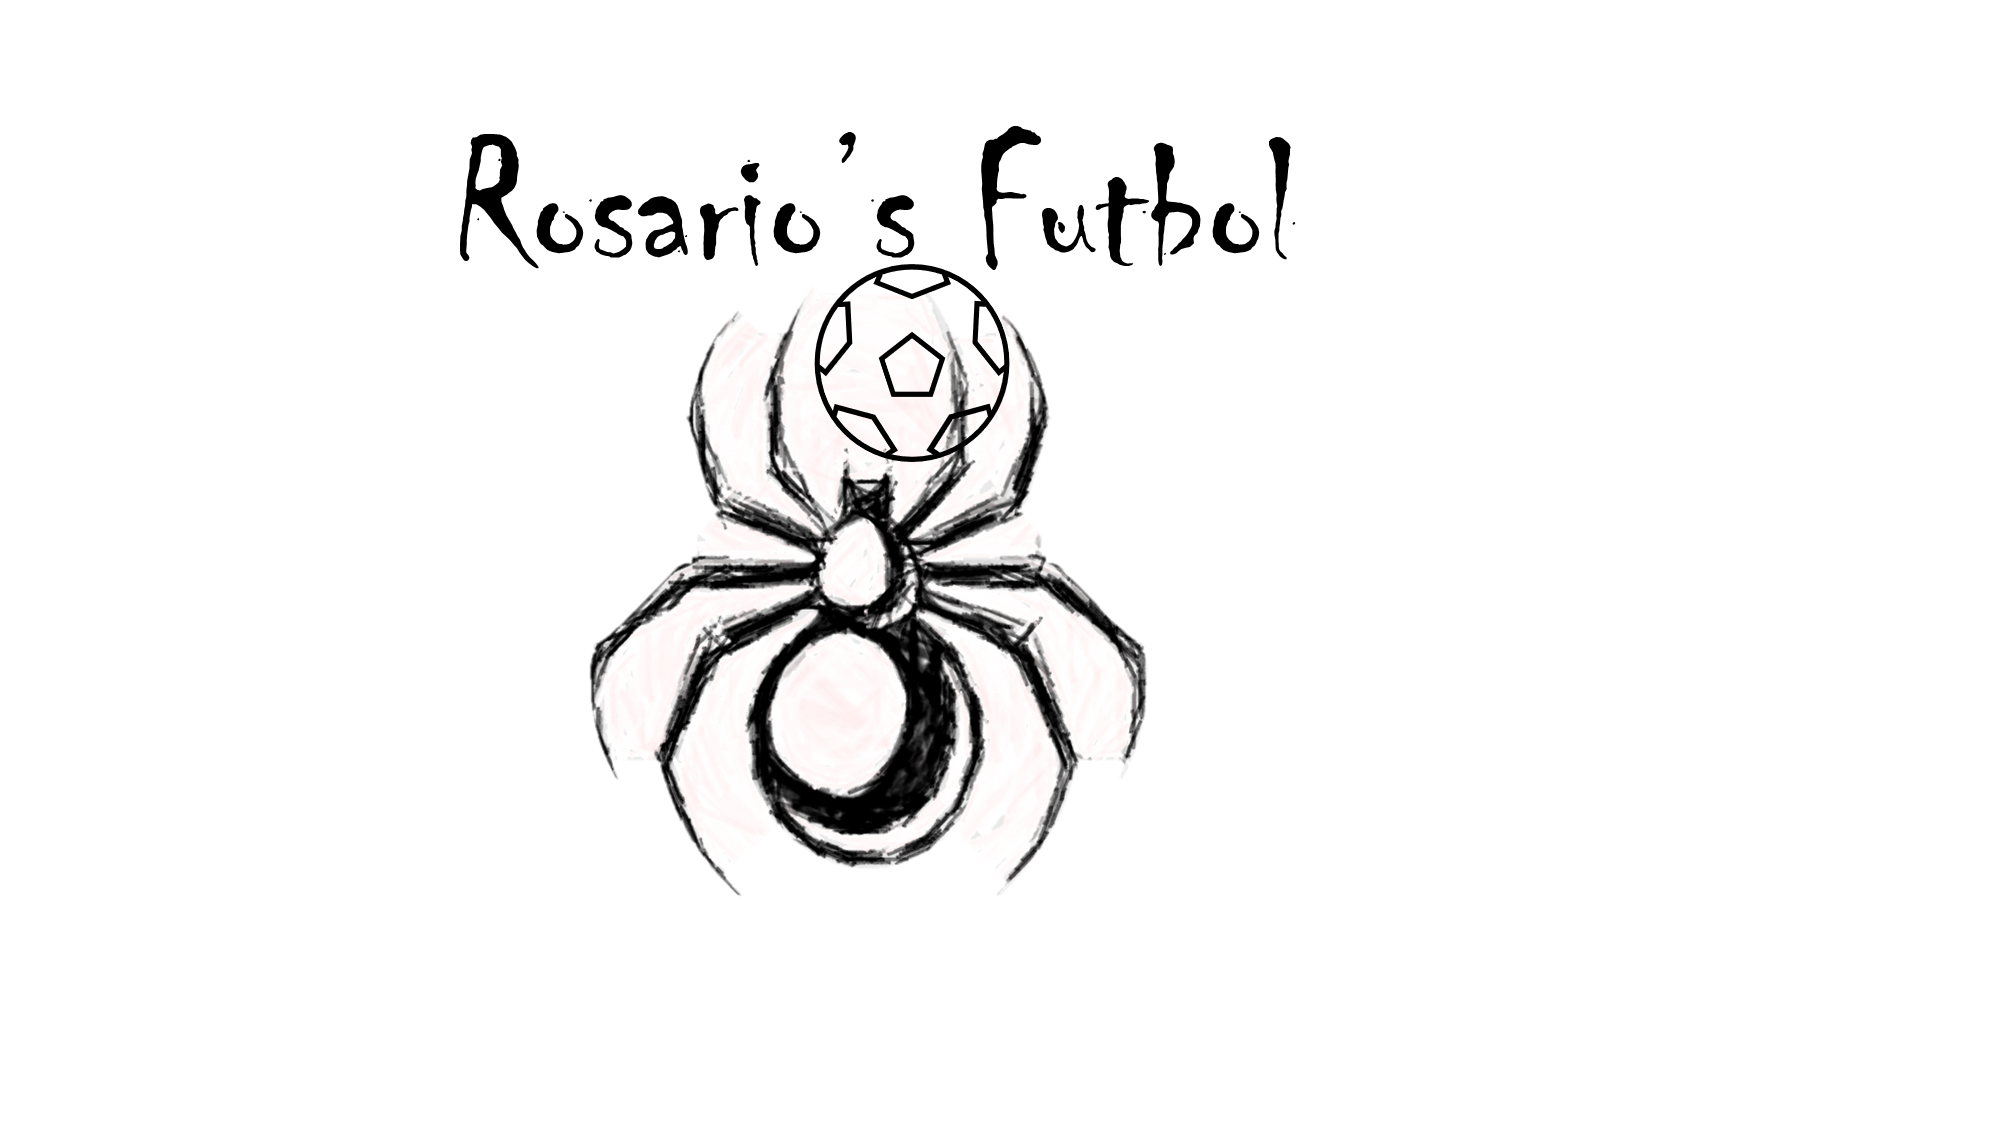 Rosario's Futbol/Soccer Training: Call Today 610-639-1081 or rosarioceccofutbol@gmail.com 